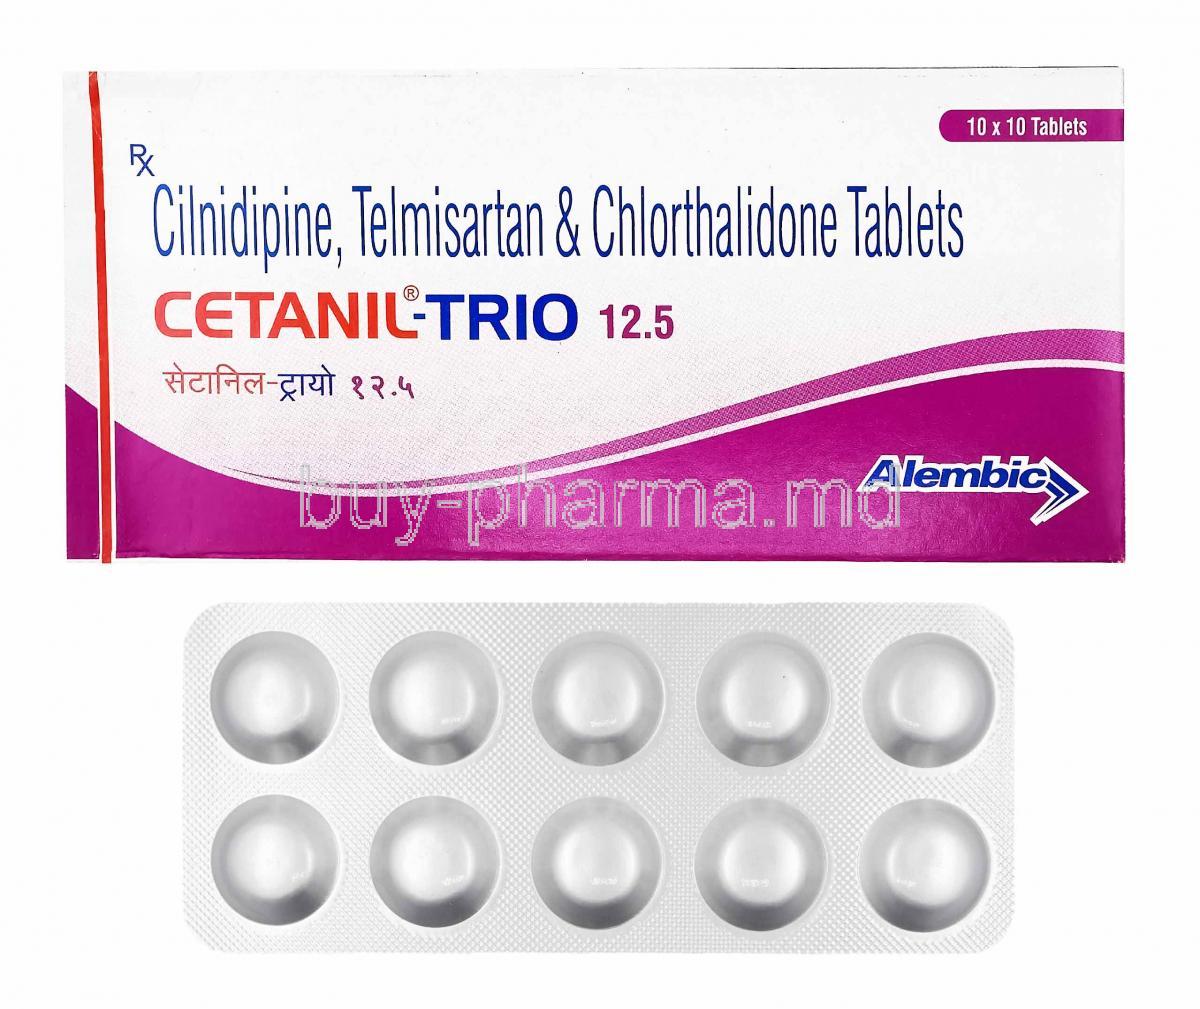 Cetanil-Trio, Telmisartan, Cilnidipine and Chlorthalidone 12.5mg, box and tablets